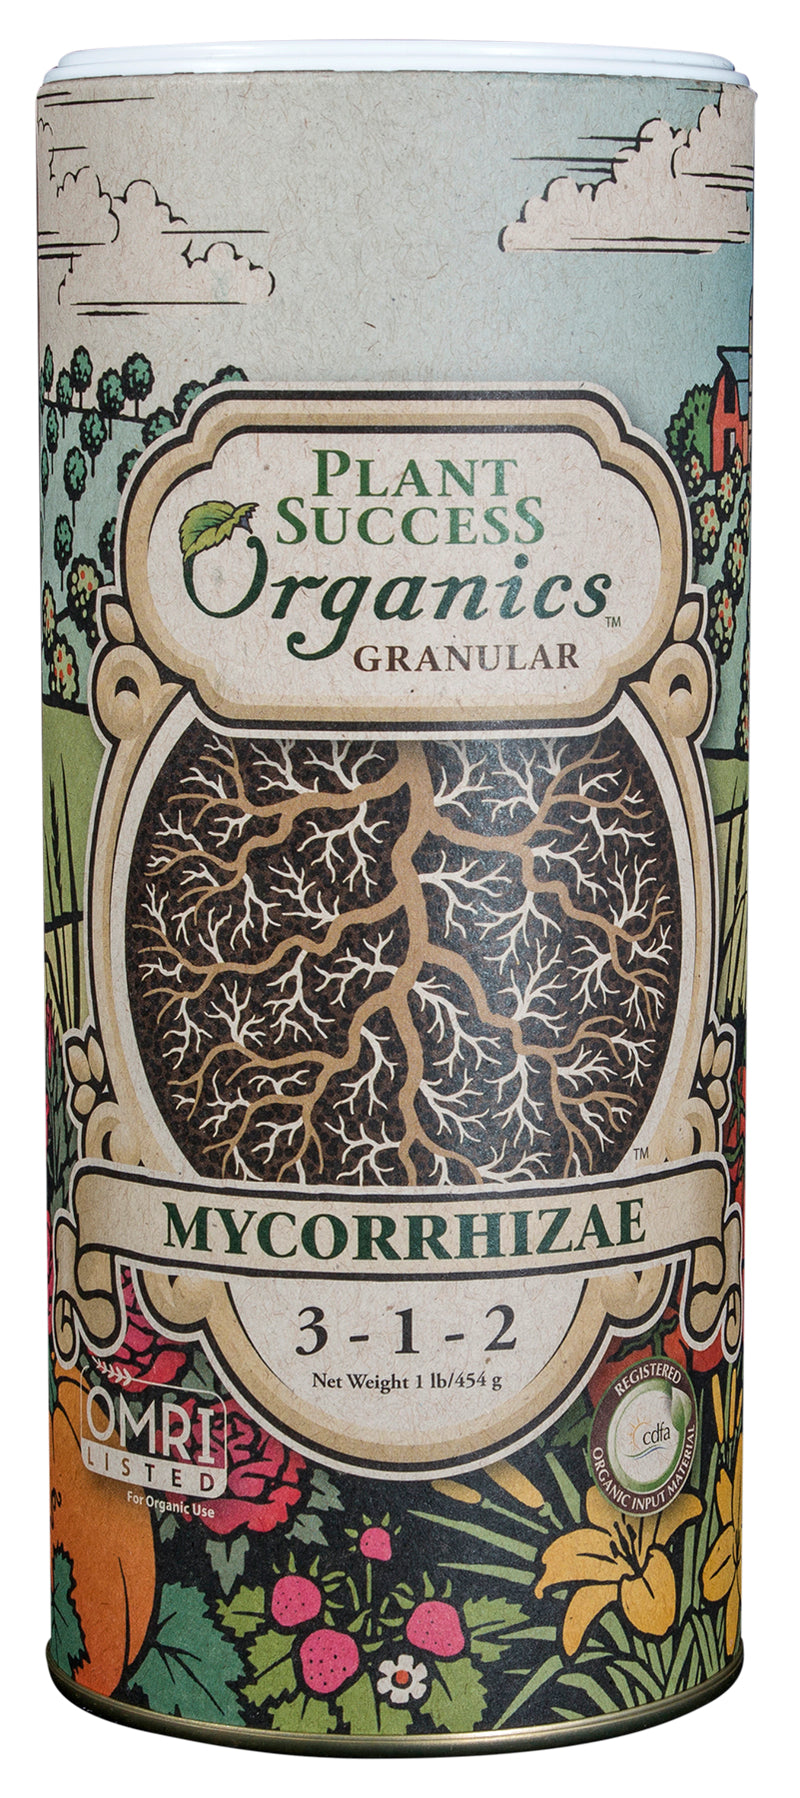 Plant Success Organics Granular Mycorrhizae 1 Pound